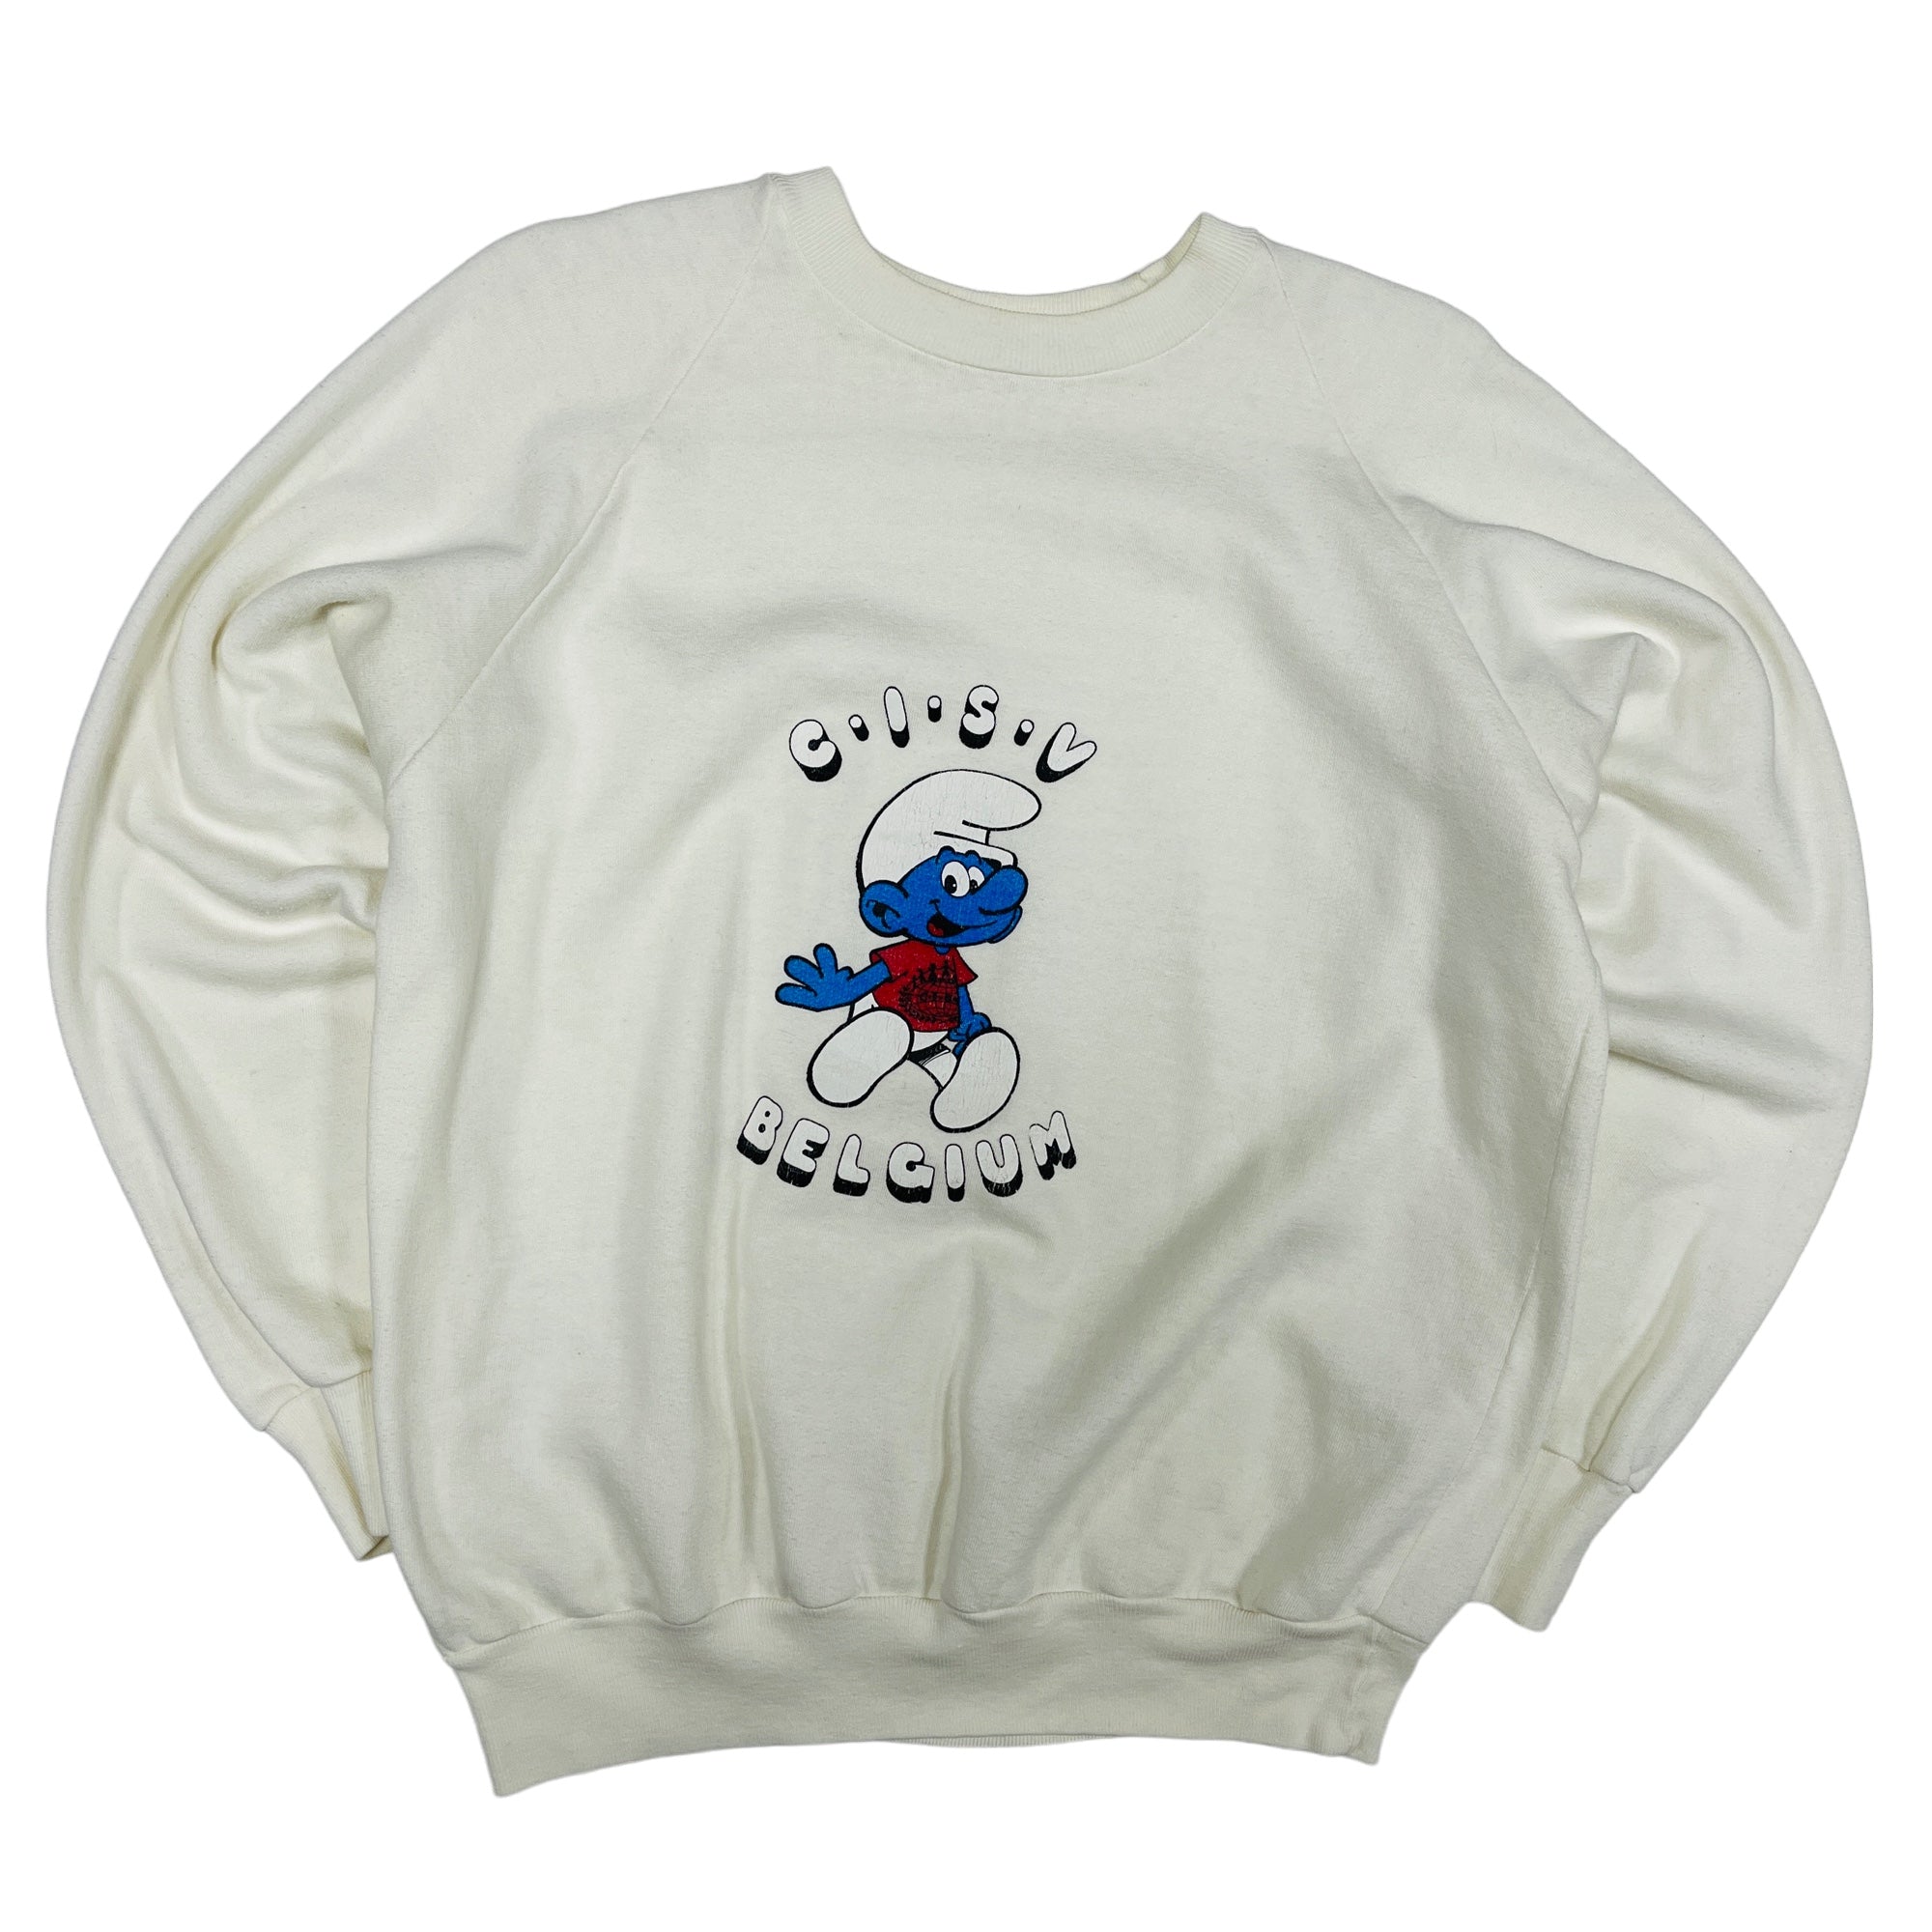 90's Smurfs Graphic Sweatshirt - Medium